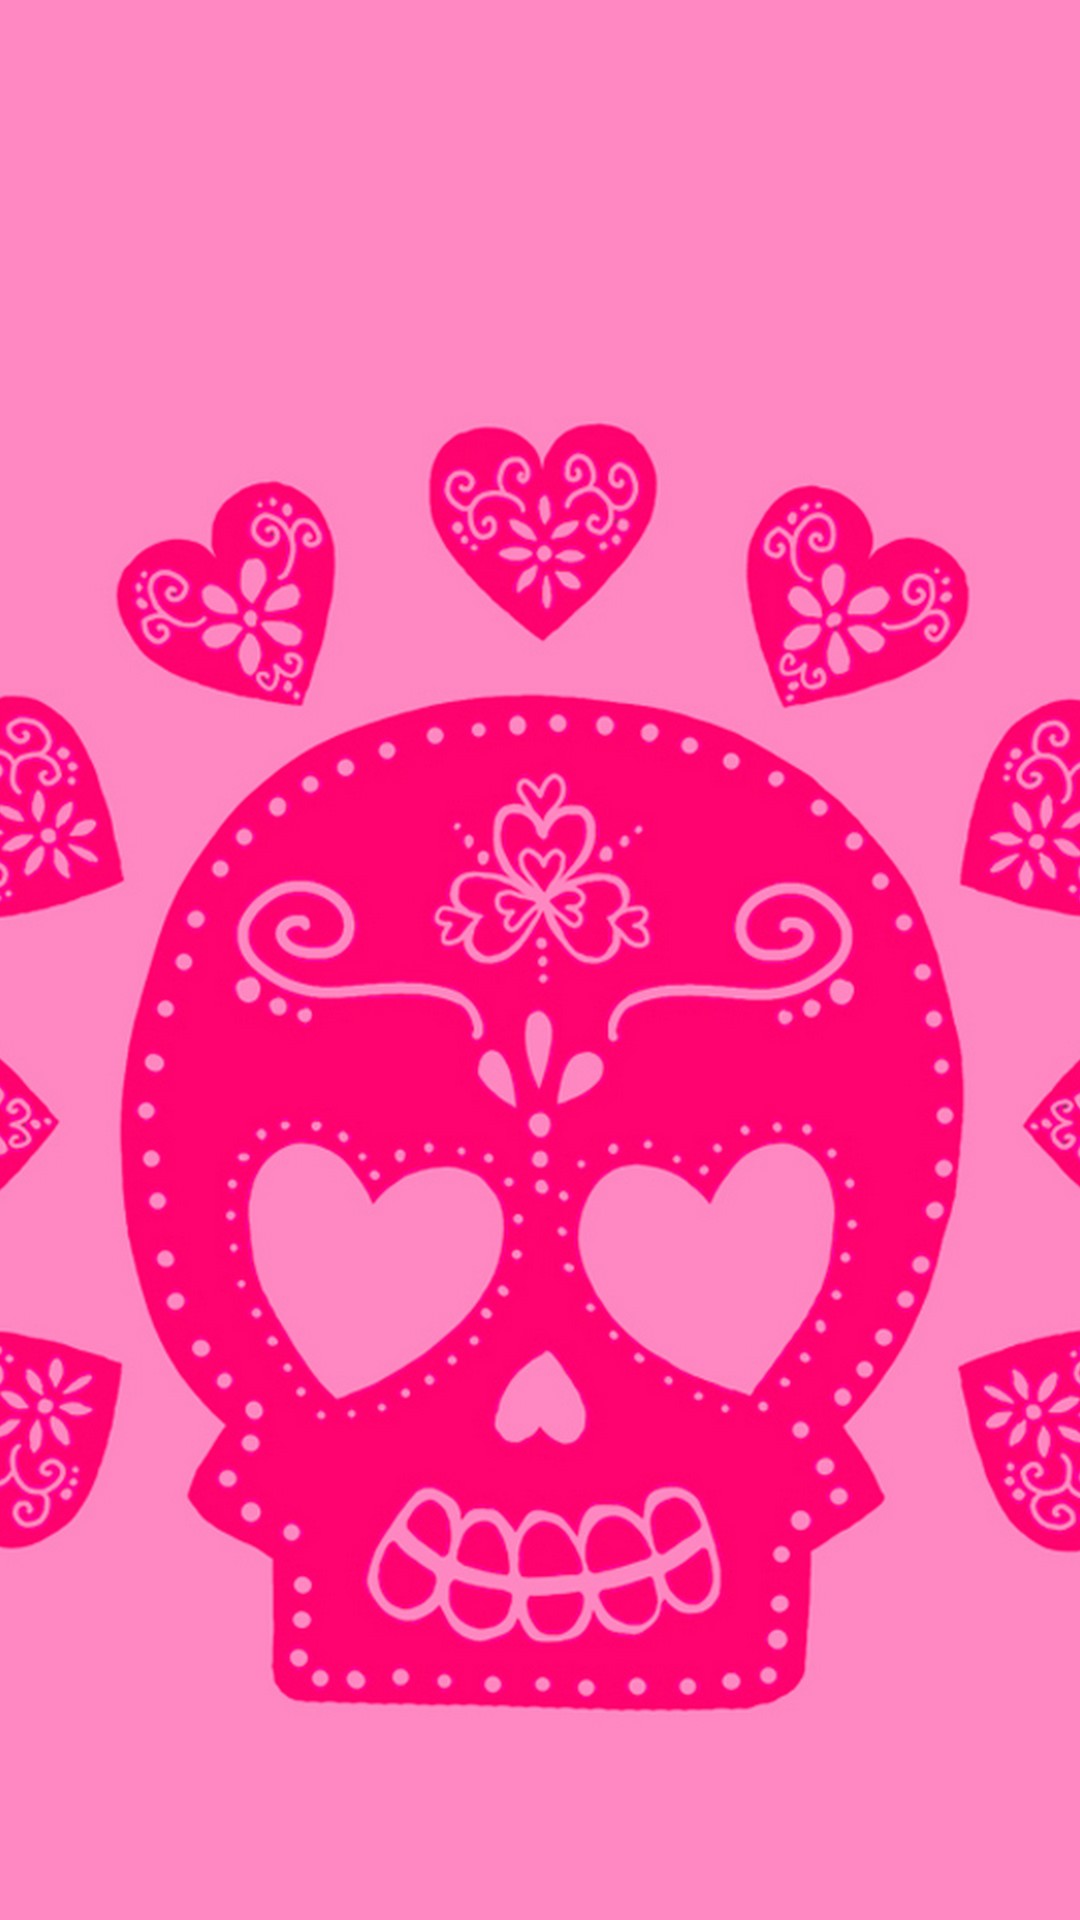 Skull Cute Girly Wallpaper Android